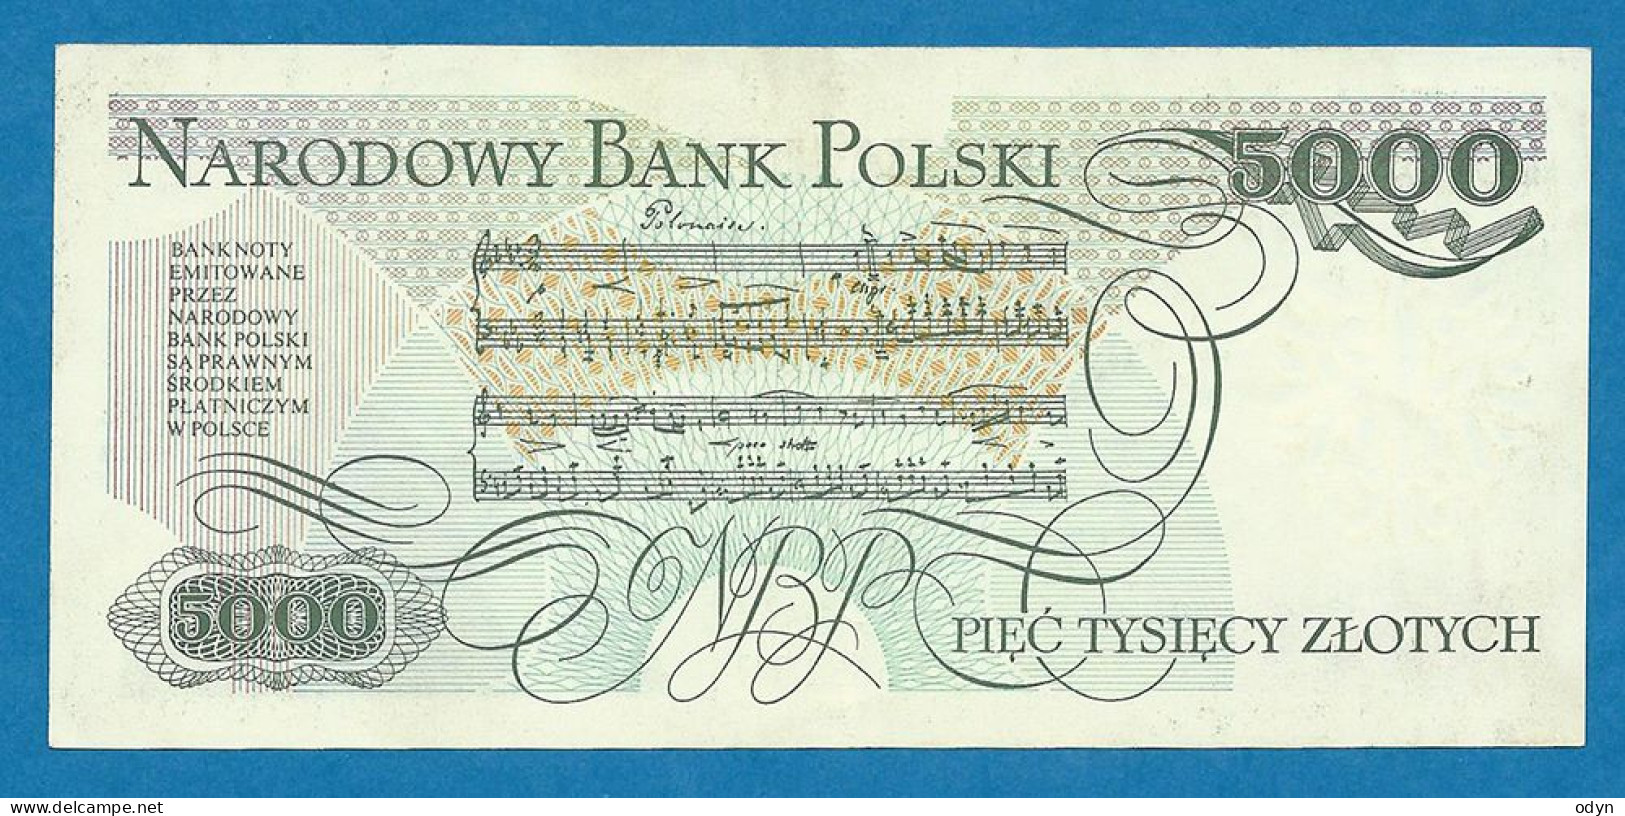 Poland, 1982, 5 000 Zlotych, Ser. K 0162290, AU - Polen